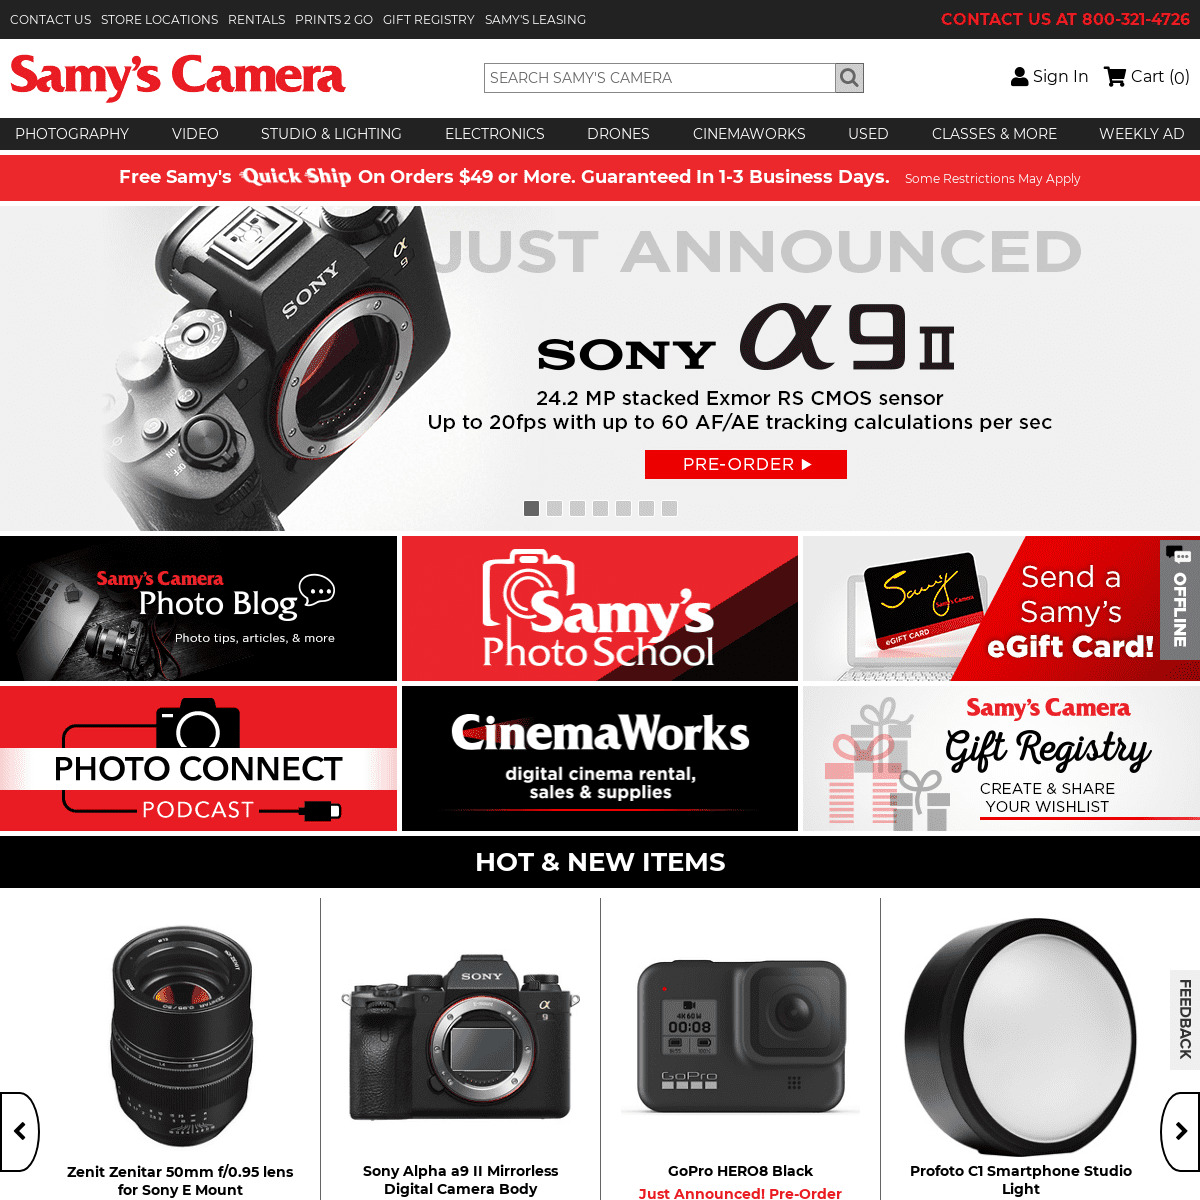 A complete backup of samys.com